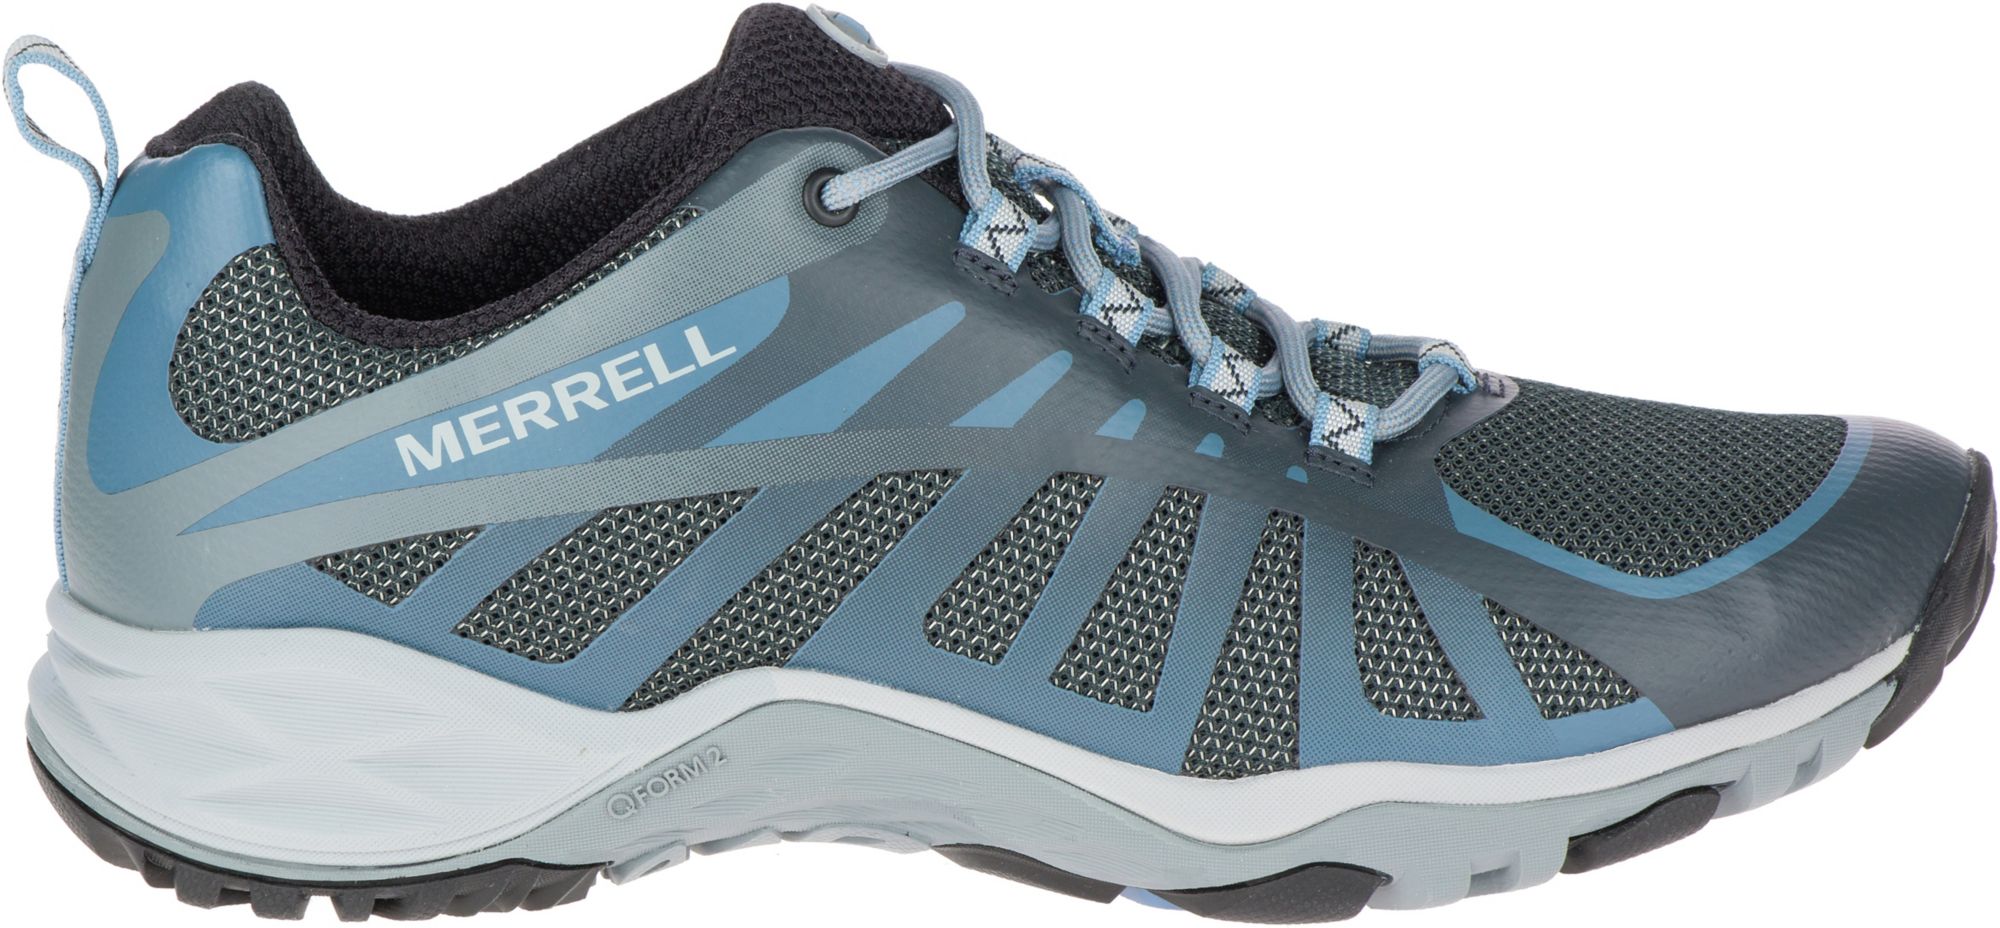 merrell women's siren edge hiking shoes